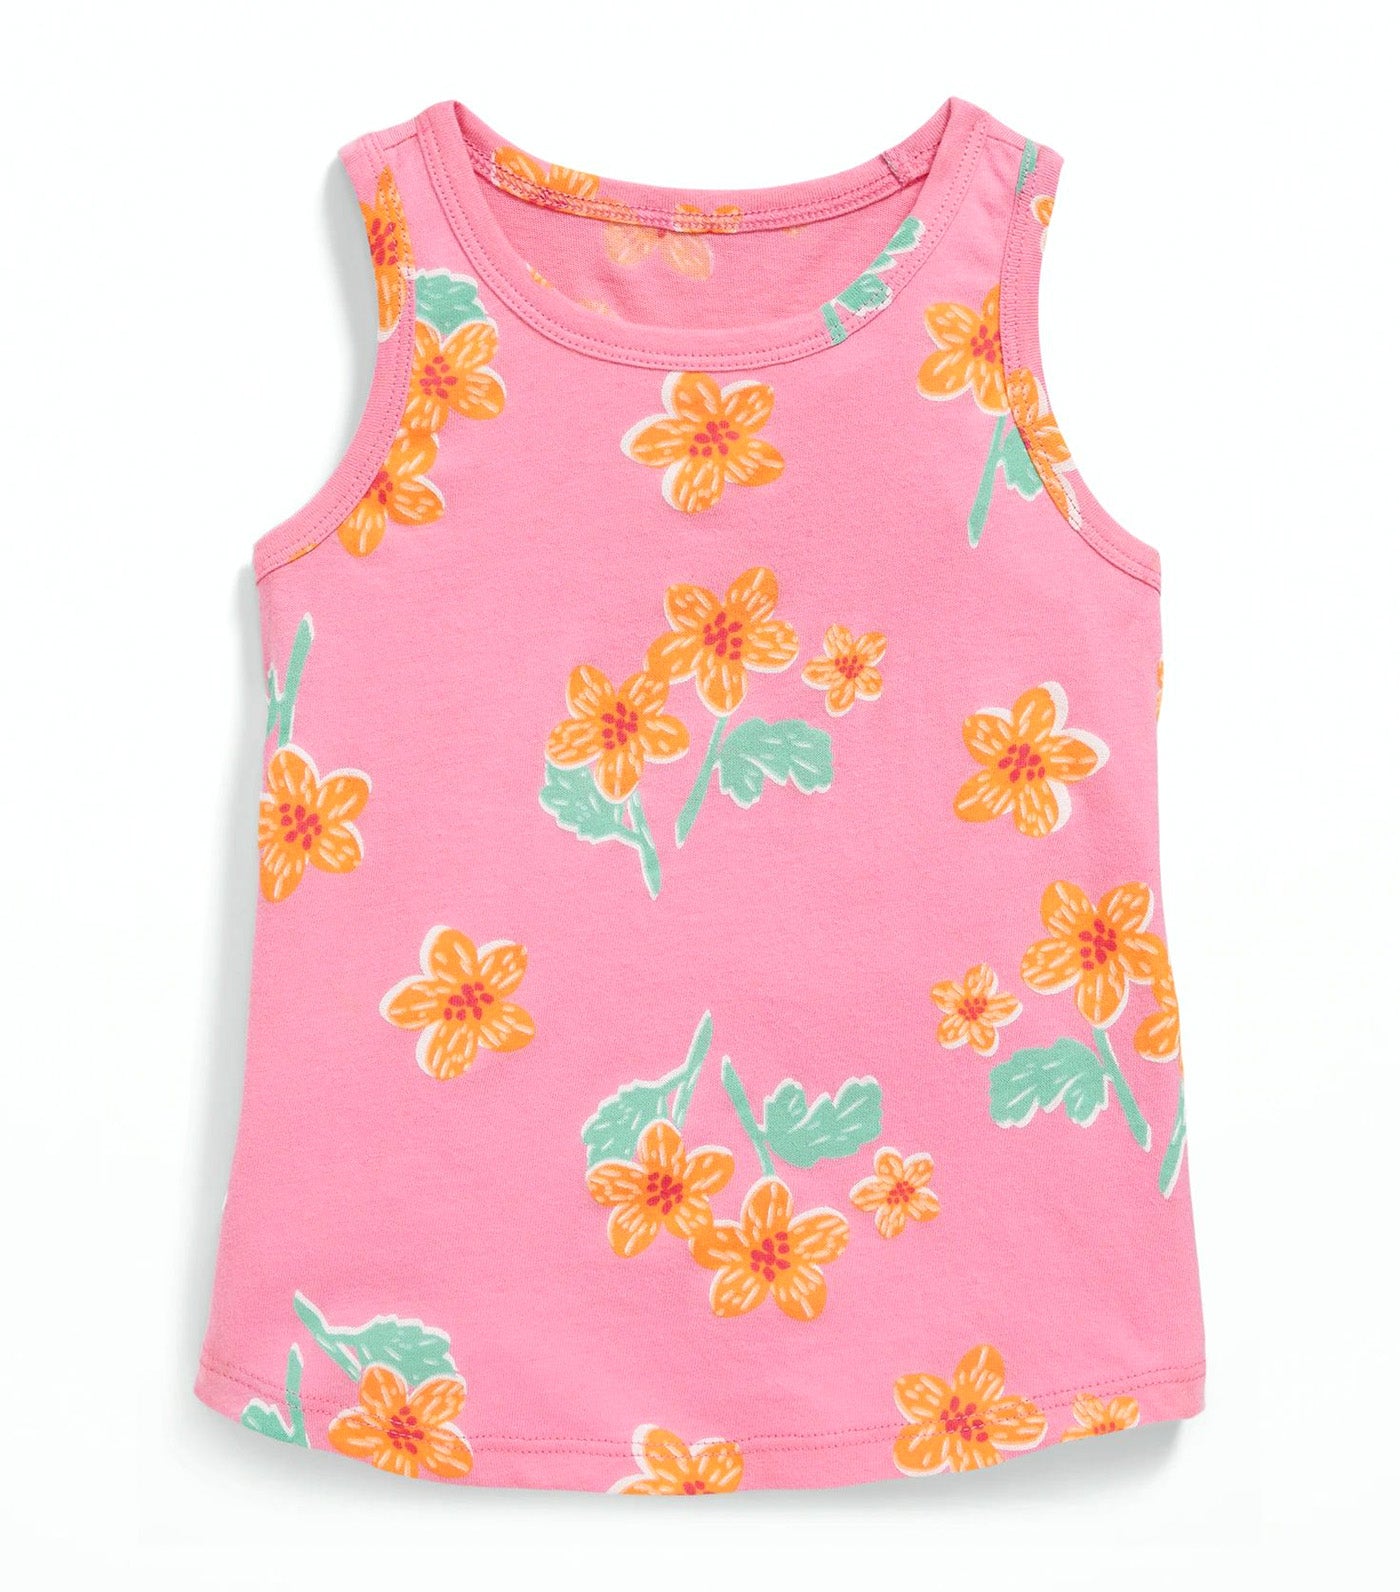 Printed Tank Top for Toddler Girls - Pink Floral